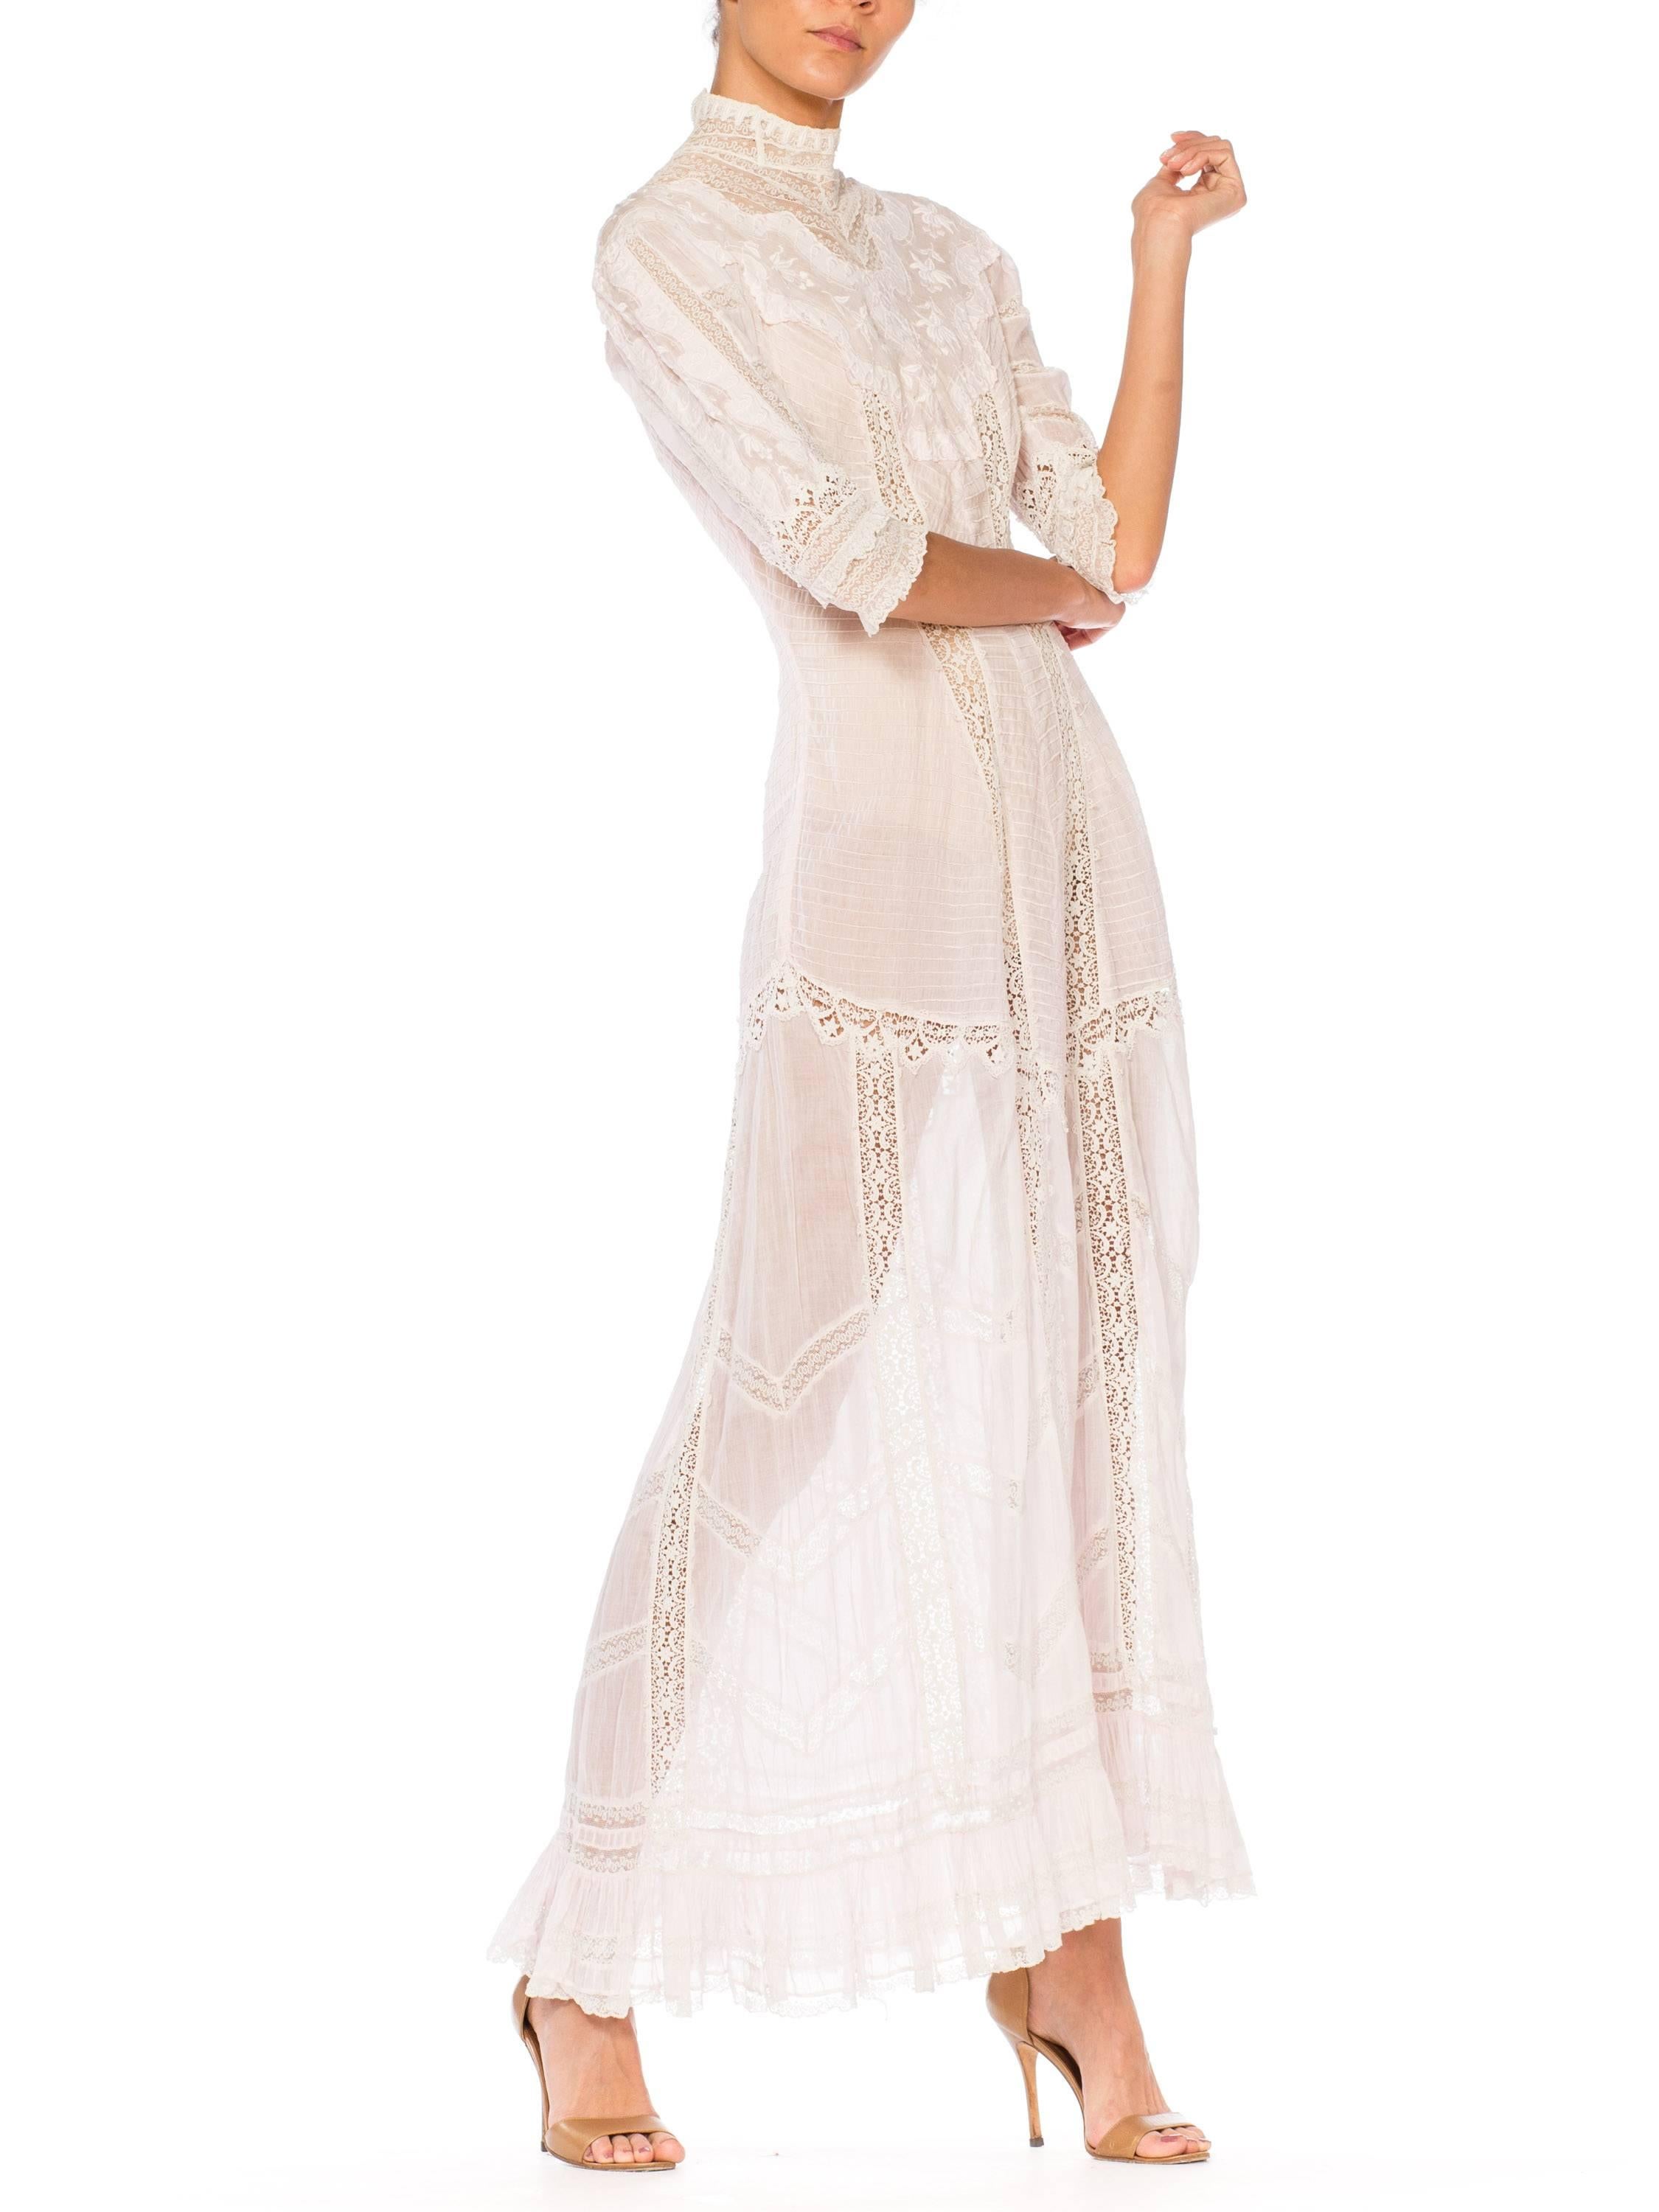 Belle Epoque Swan Neck Princess Line Victorian Organic Cotton and Lace Tea Dress 9